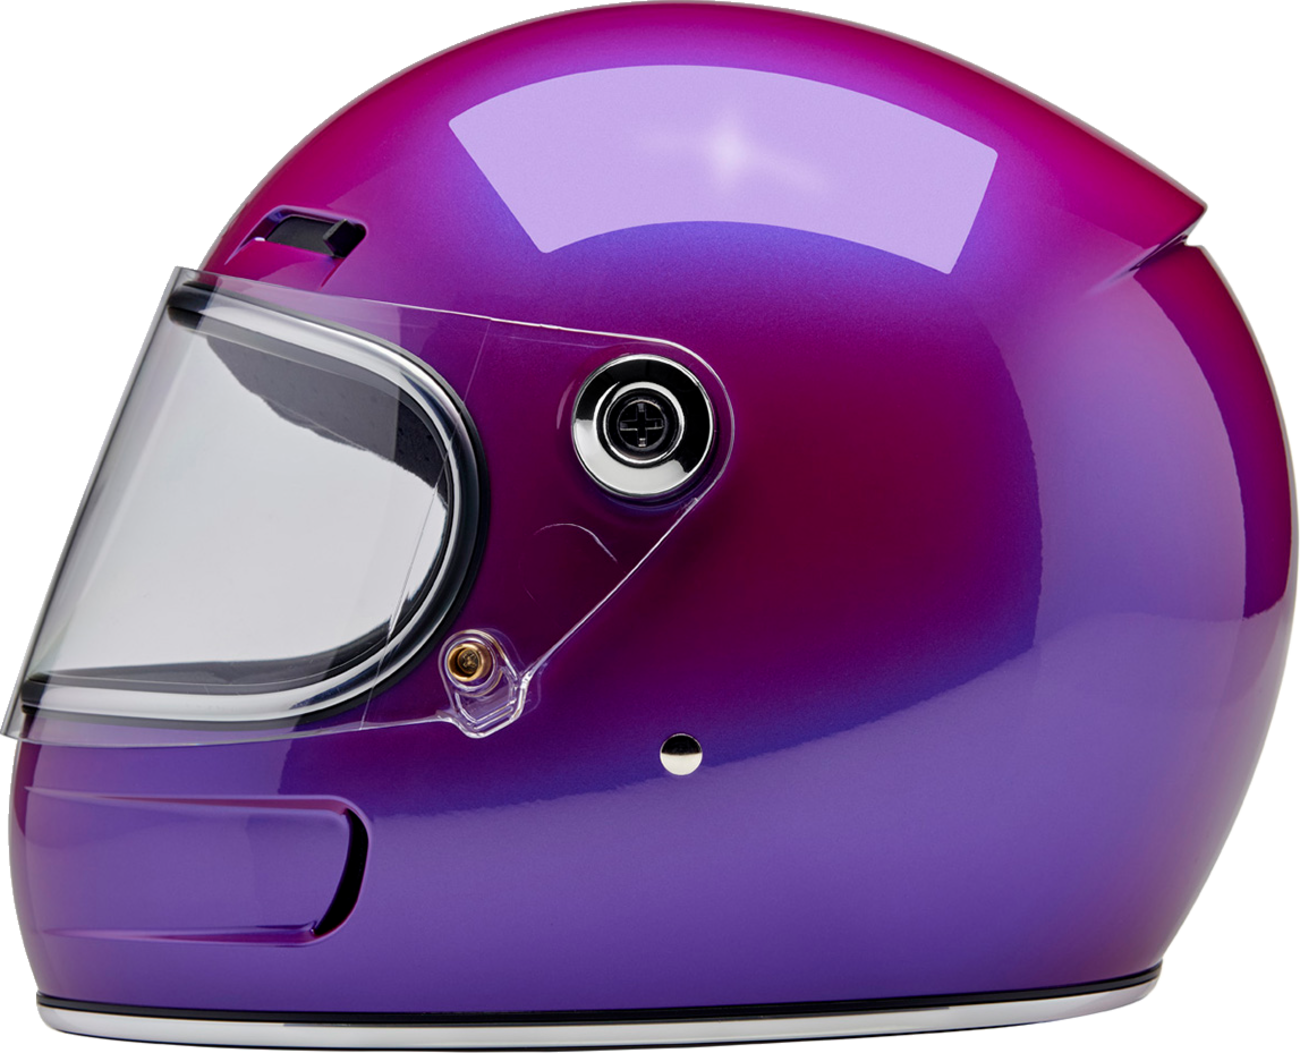 BILTWELL Gringo SV Helmet - Metallic Grape - Small 1006-339-502